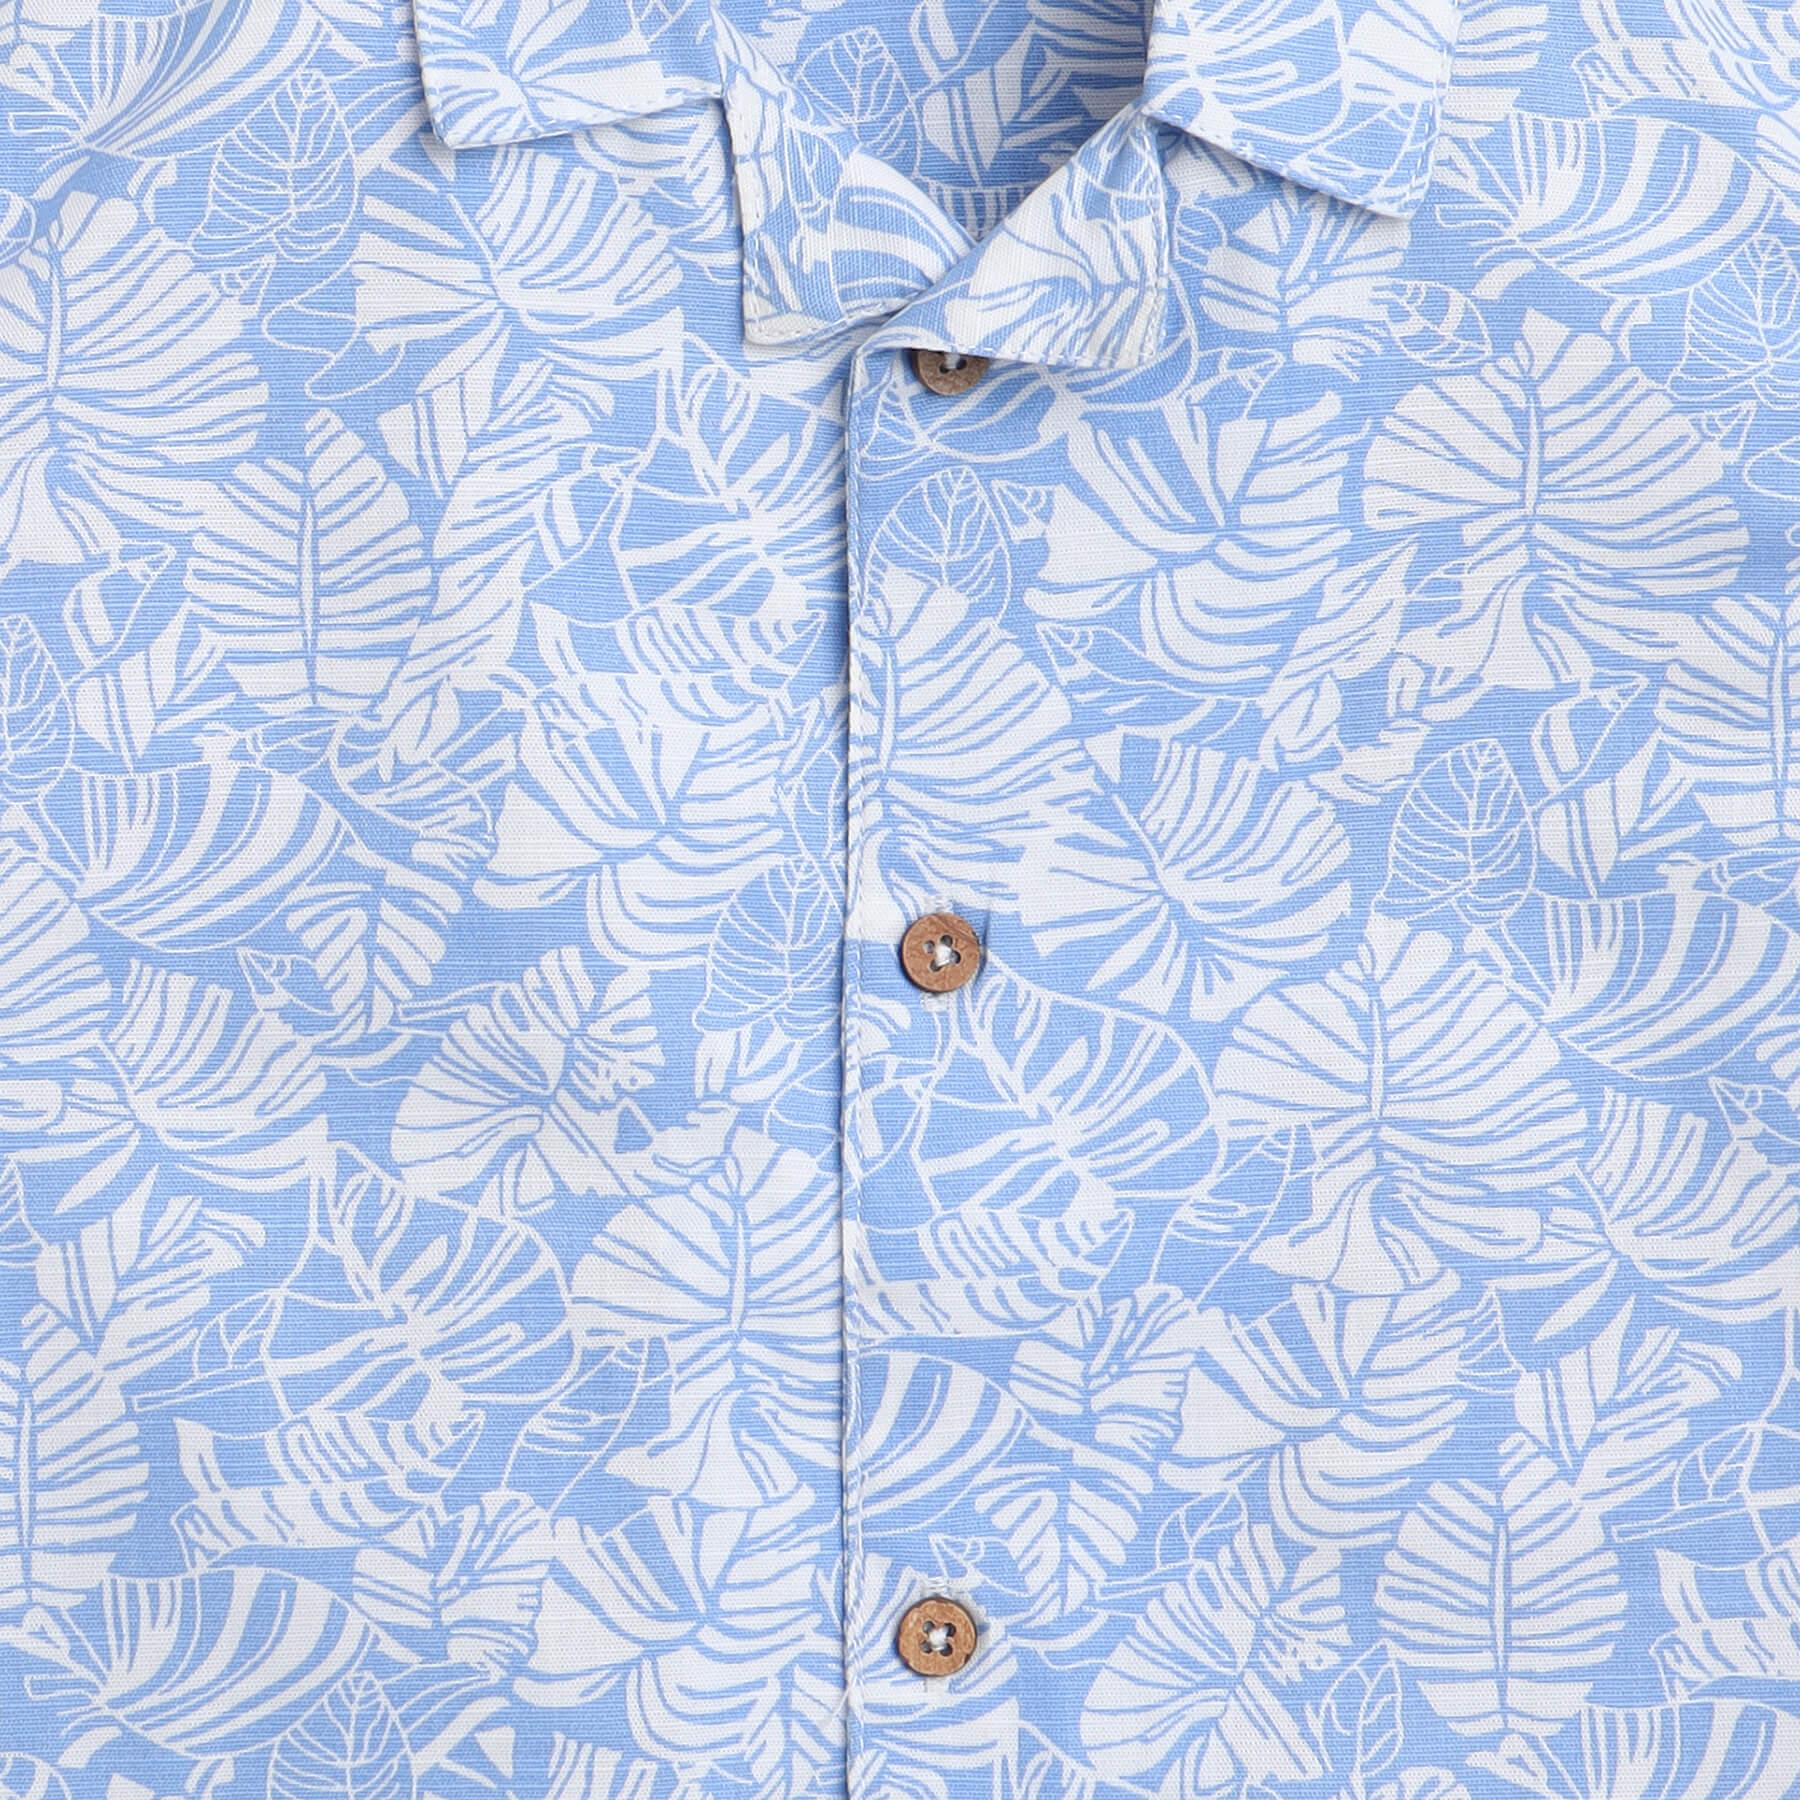 Taffykids tropical printed half sleeves shirt- White/blue